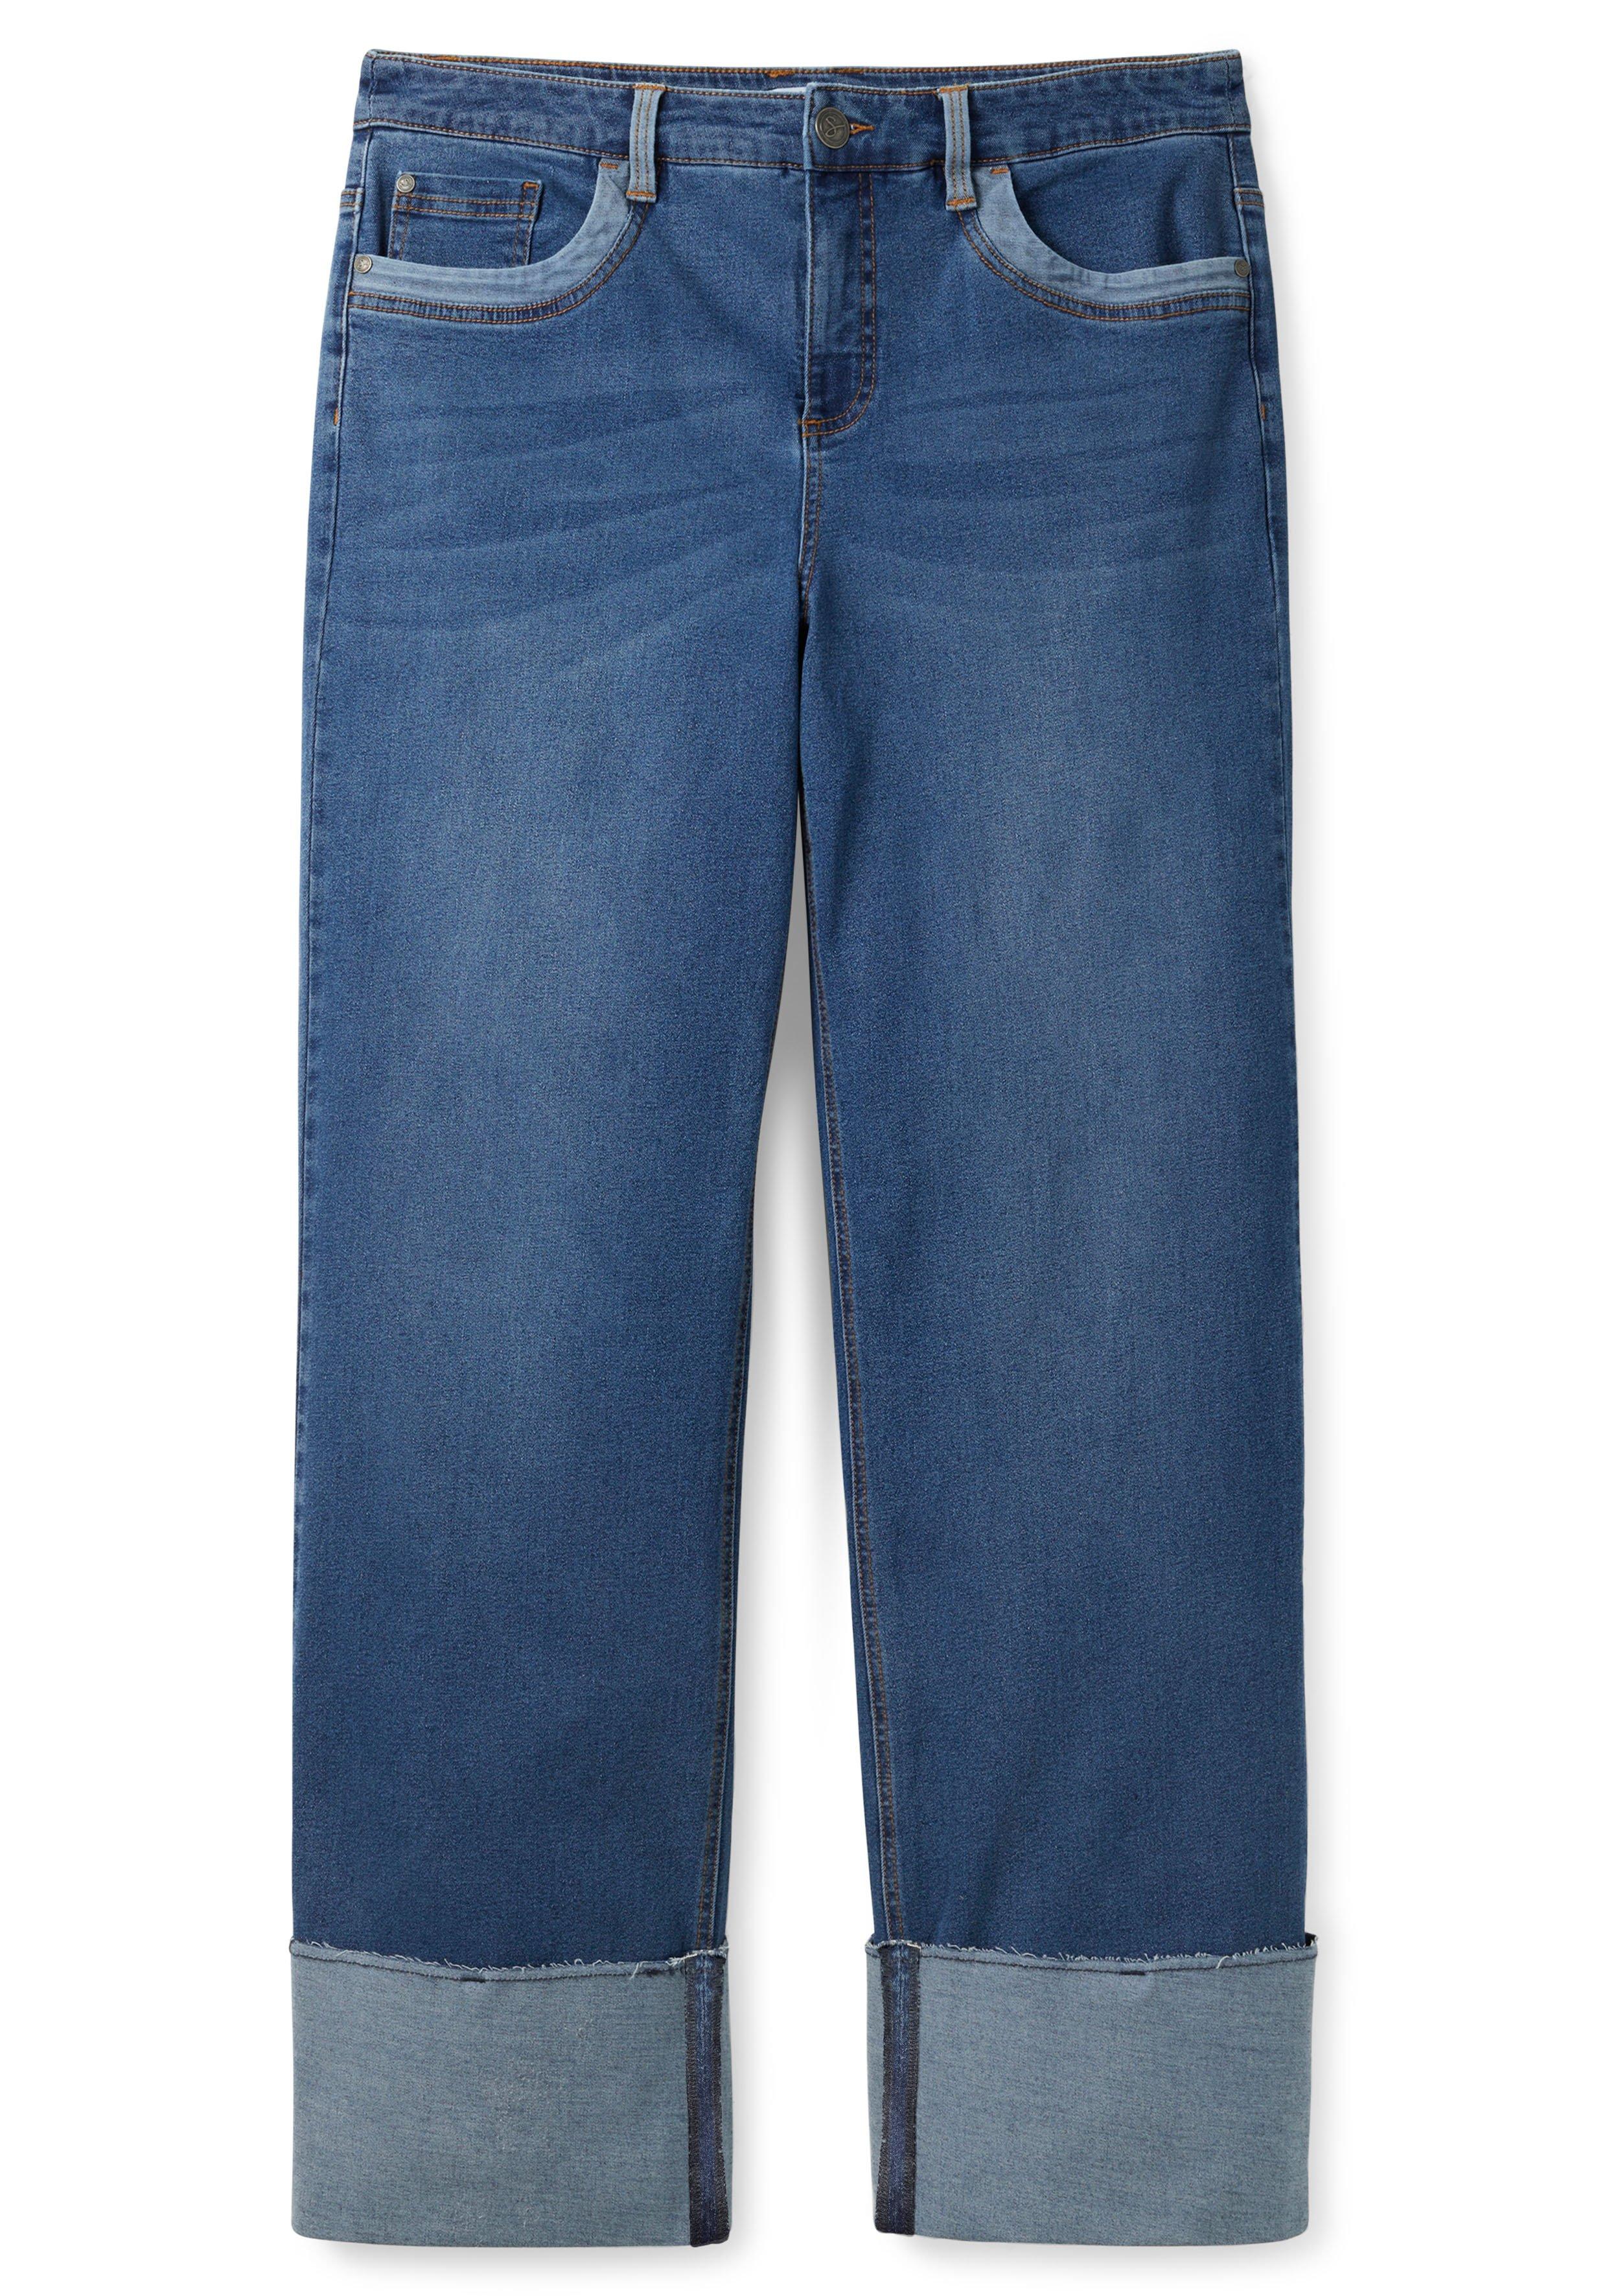 Jeansjacke in kurzer, kastiger Form blue Denim sheego | Halbarm - mit